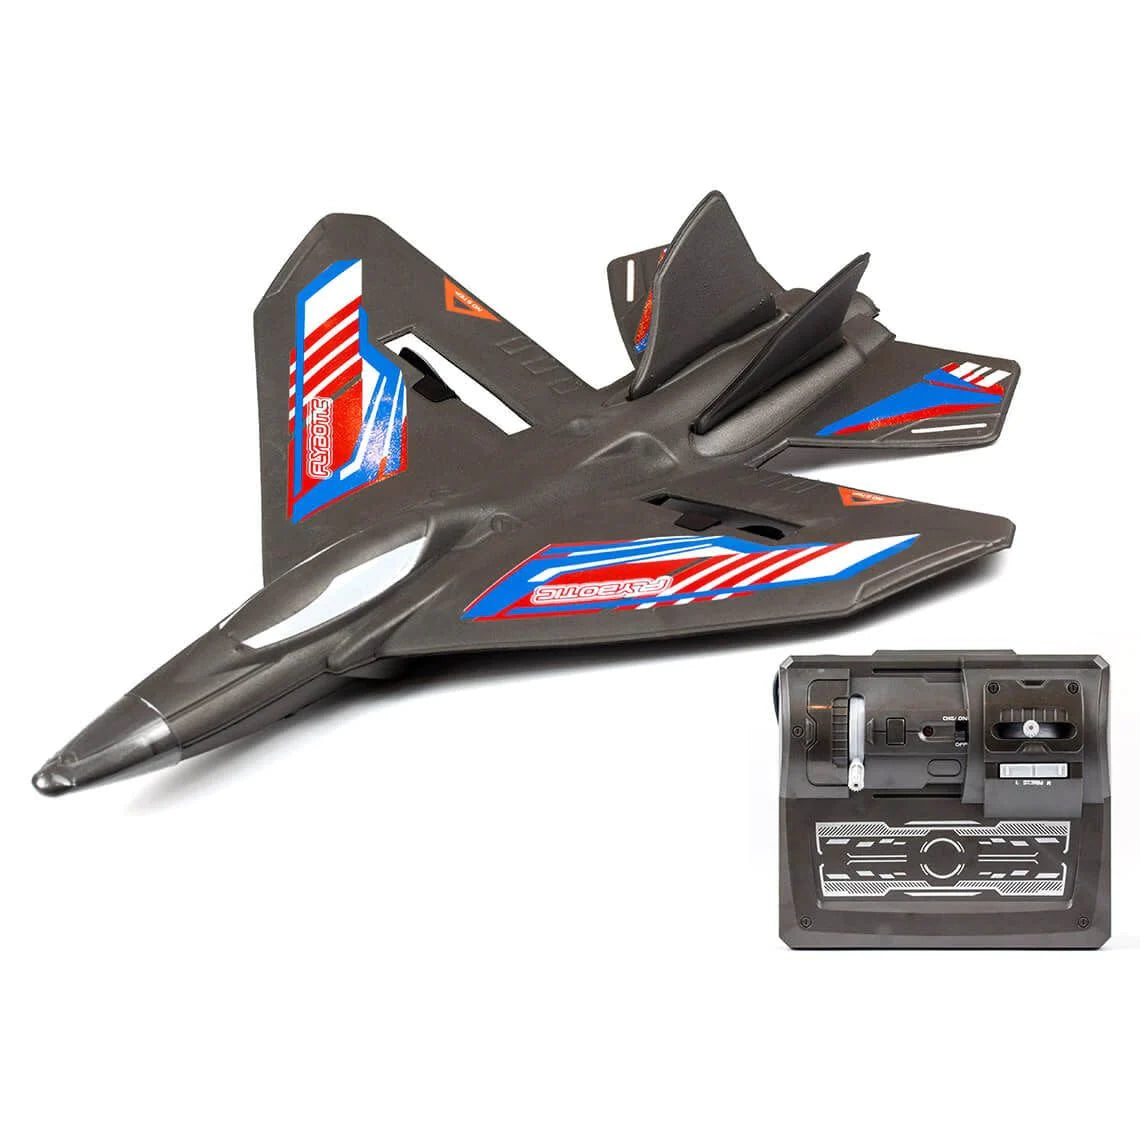 Silverlit X-Twin Evo Beginner RC Plane - Assorted Colors (1) - Hobbytech Toys